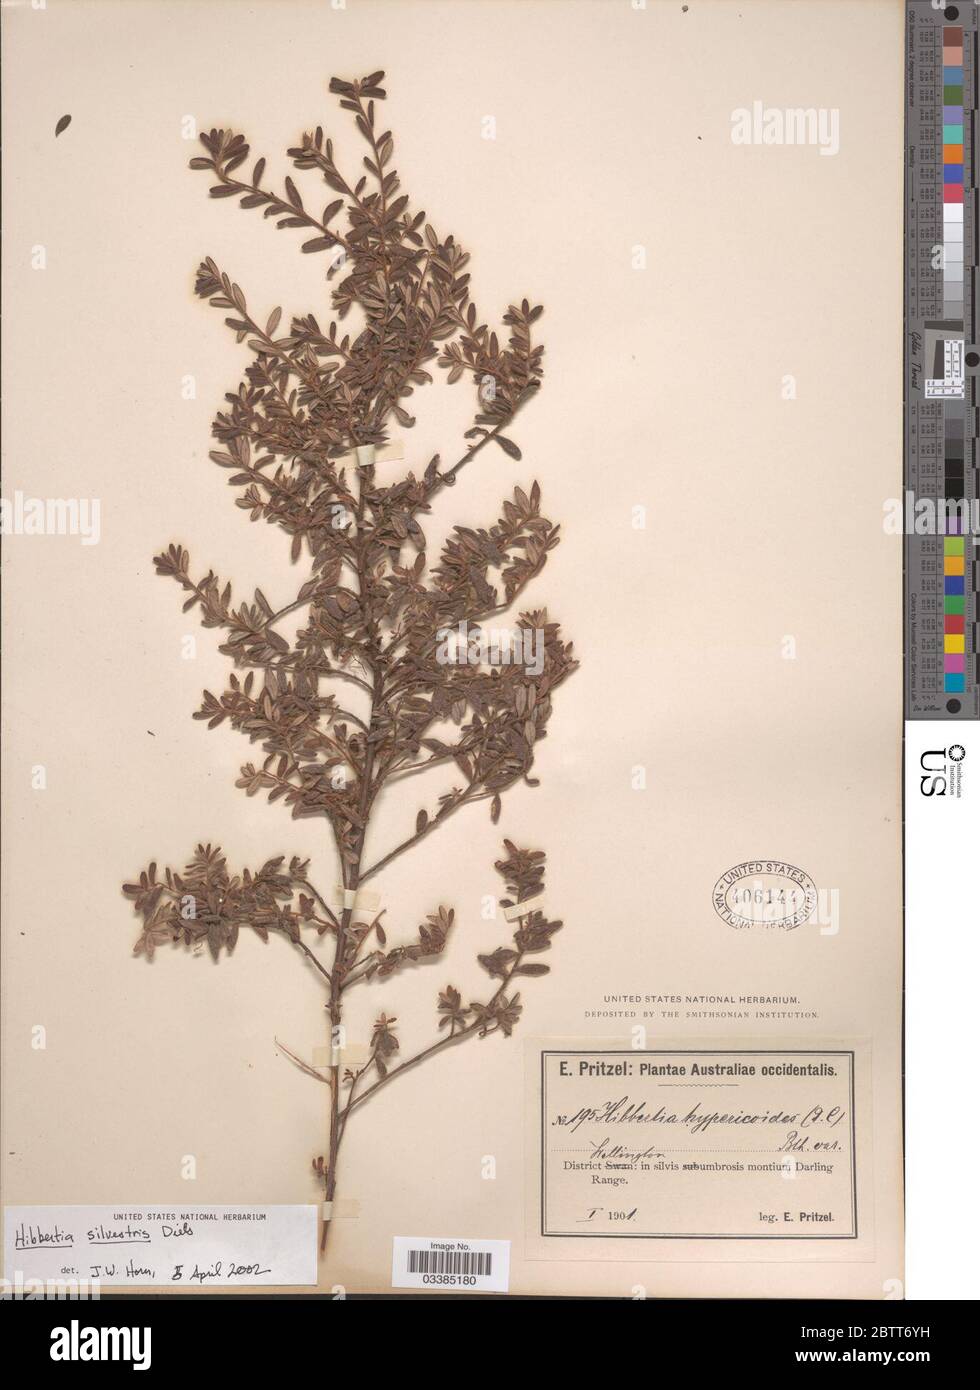 Hibbertia silvestris Diels. Stock Photo